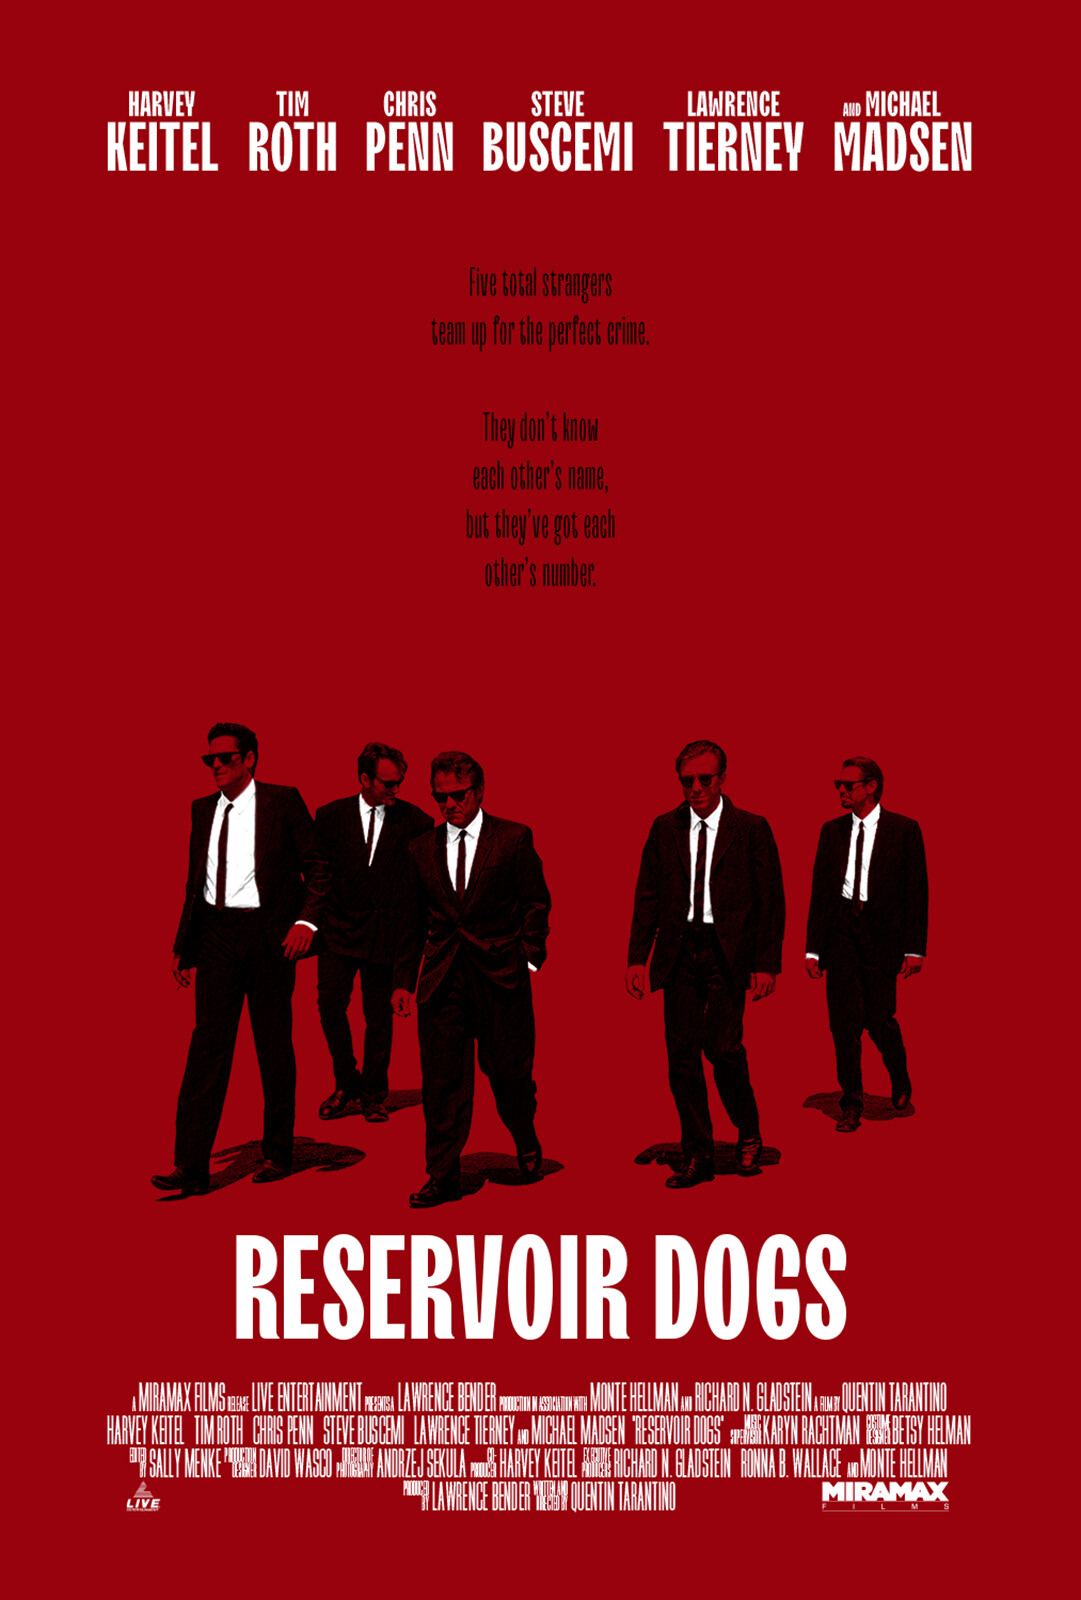 Reservoir Dogs (Quentin Tarantino, 1992)